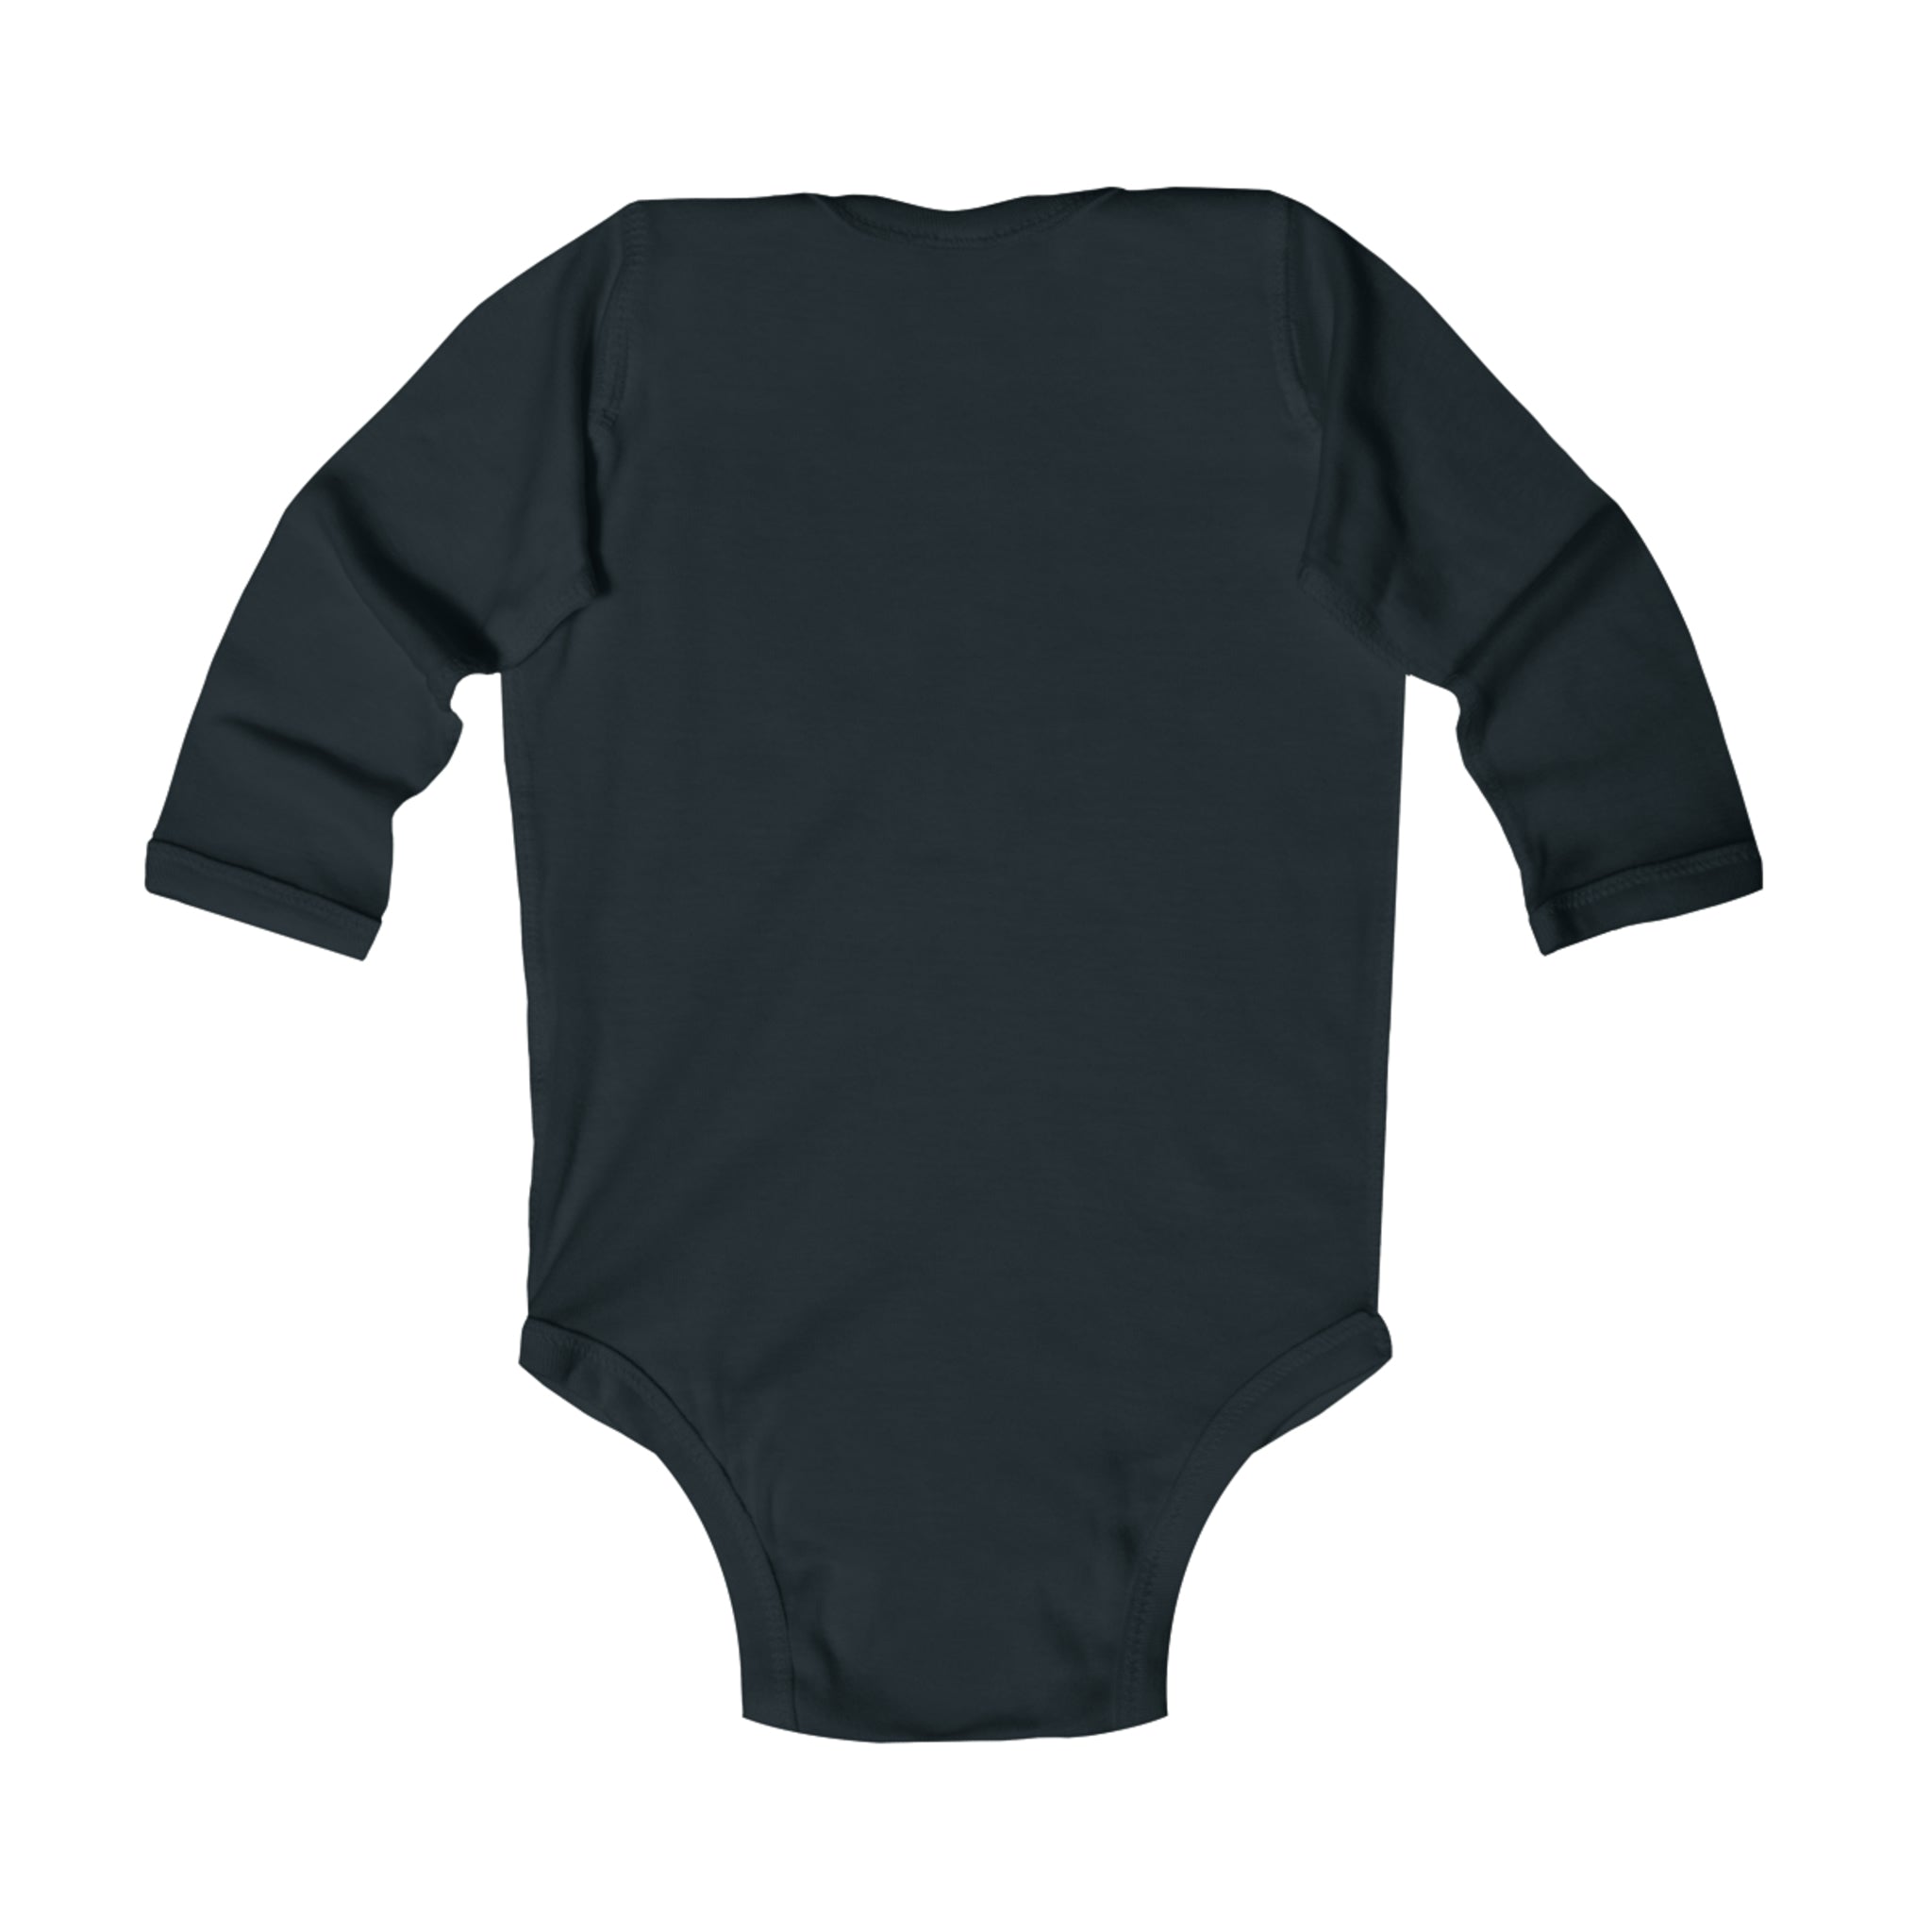 Happy 4th of July American Flag Sunflower design Long Sleeve Baby Bodysuit